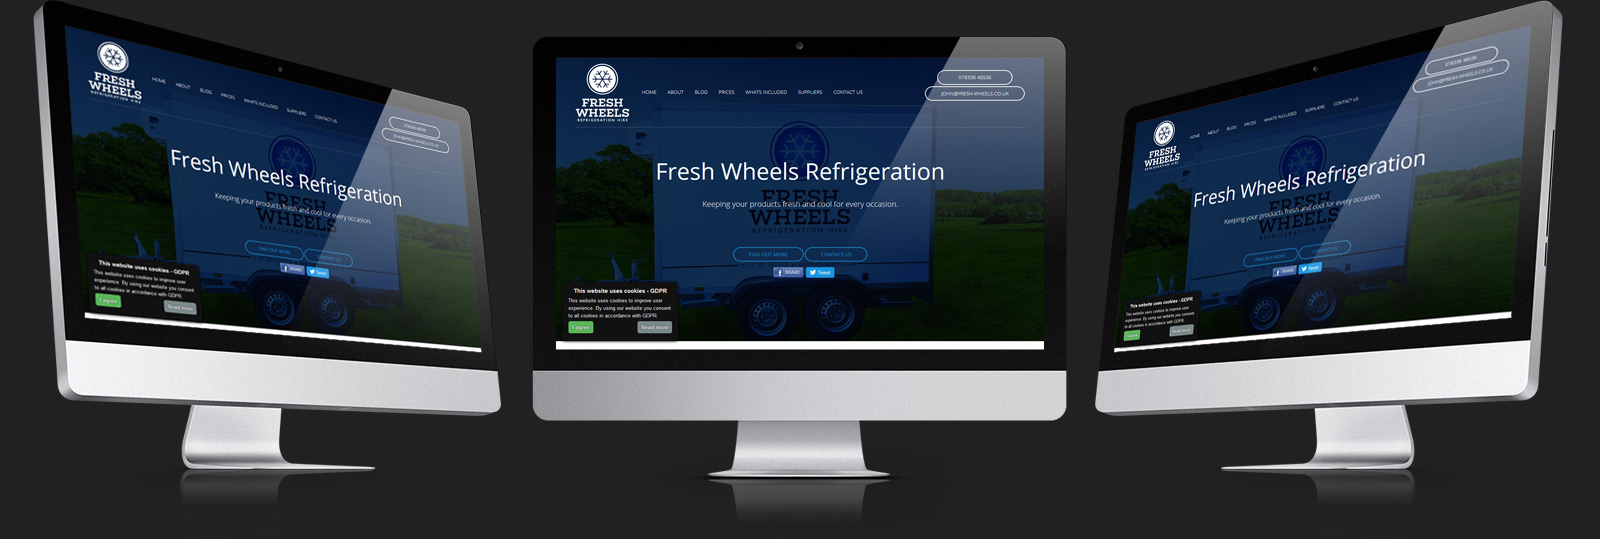 Stamford Web Design - Fresh Wheels Refrigeration